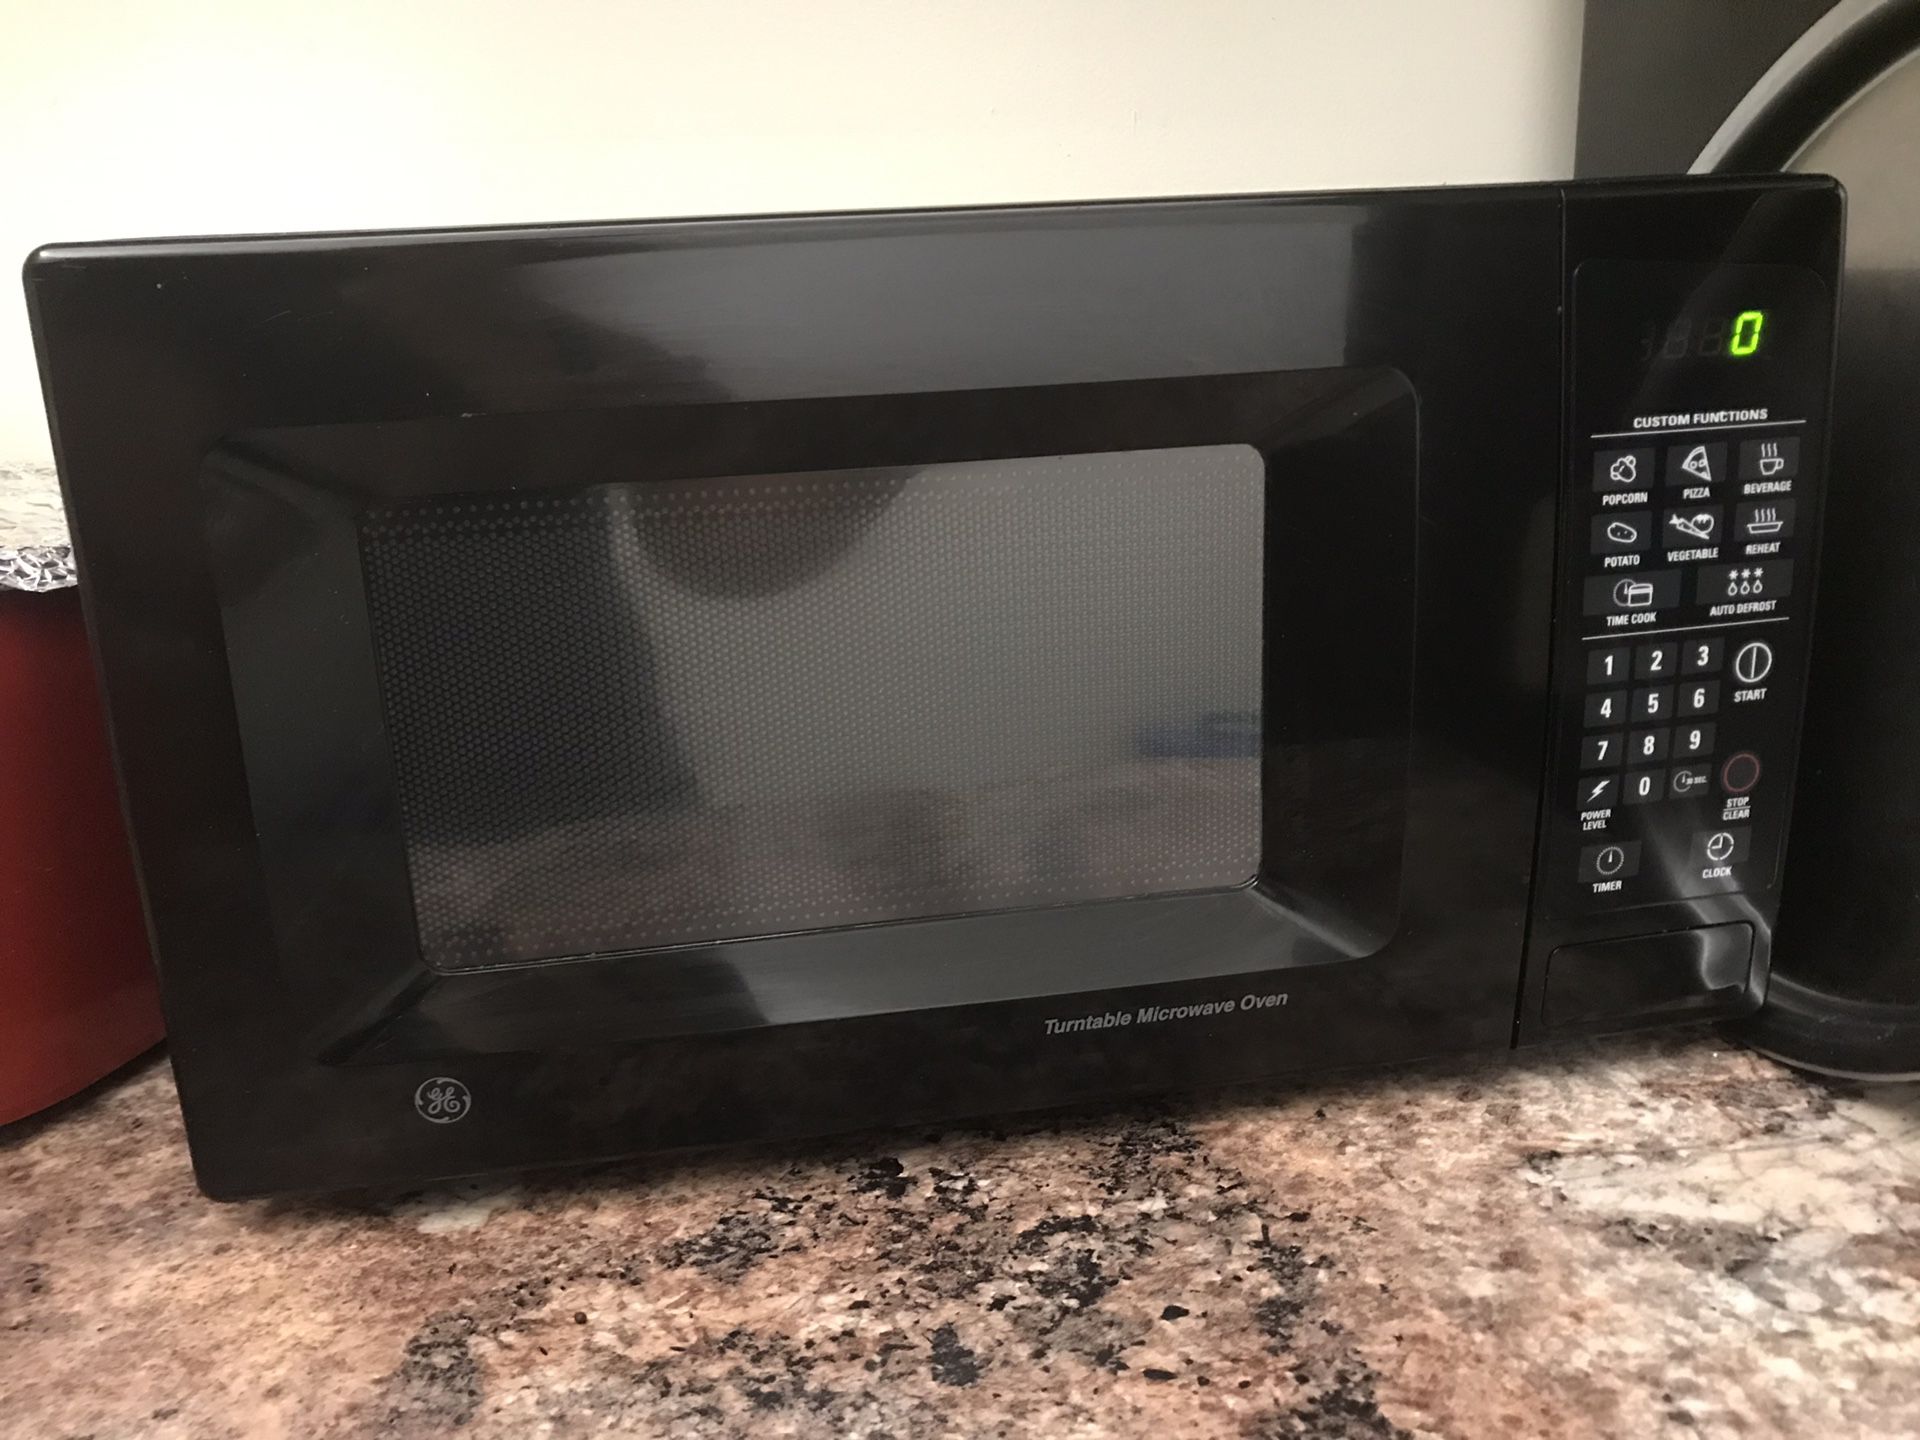 Mini microwave